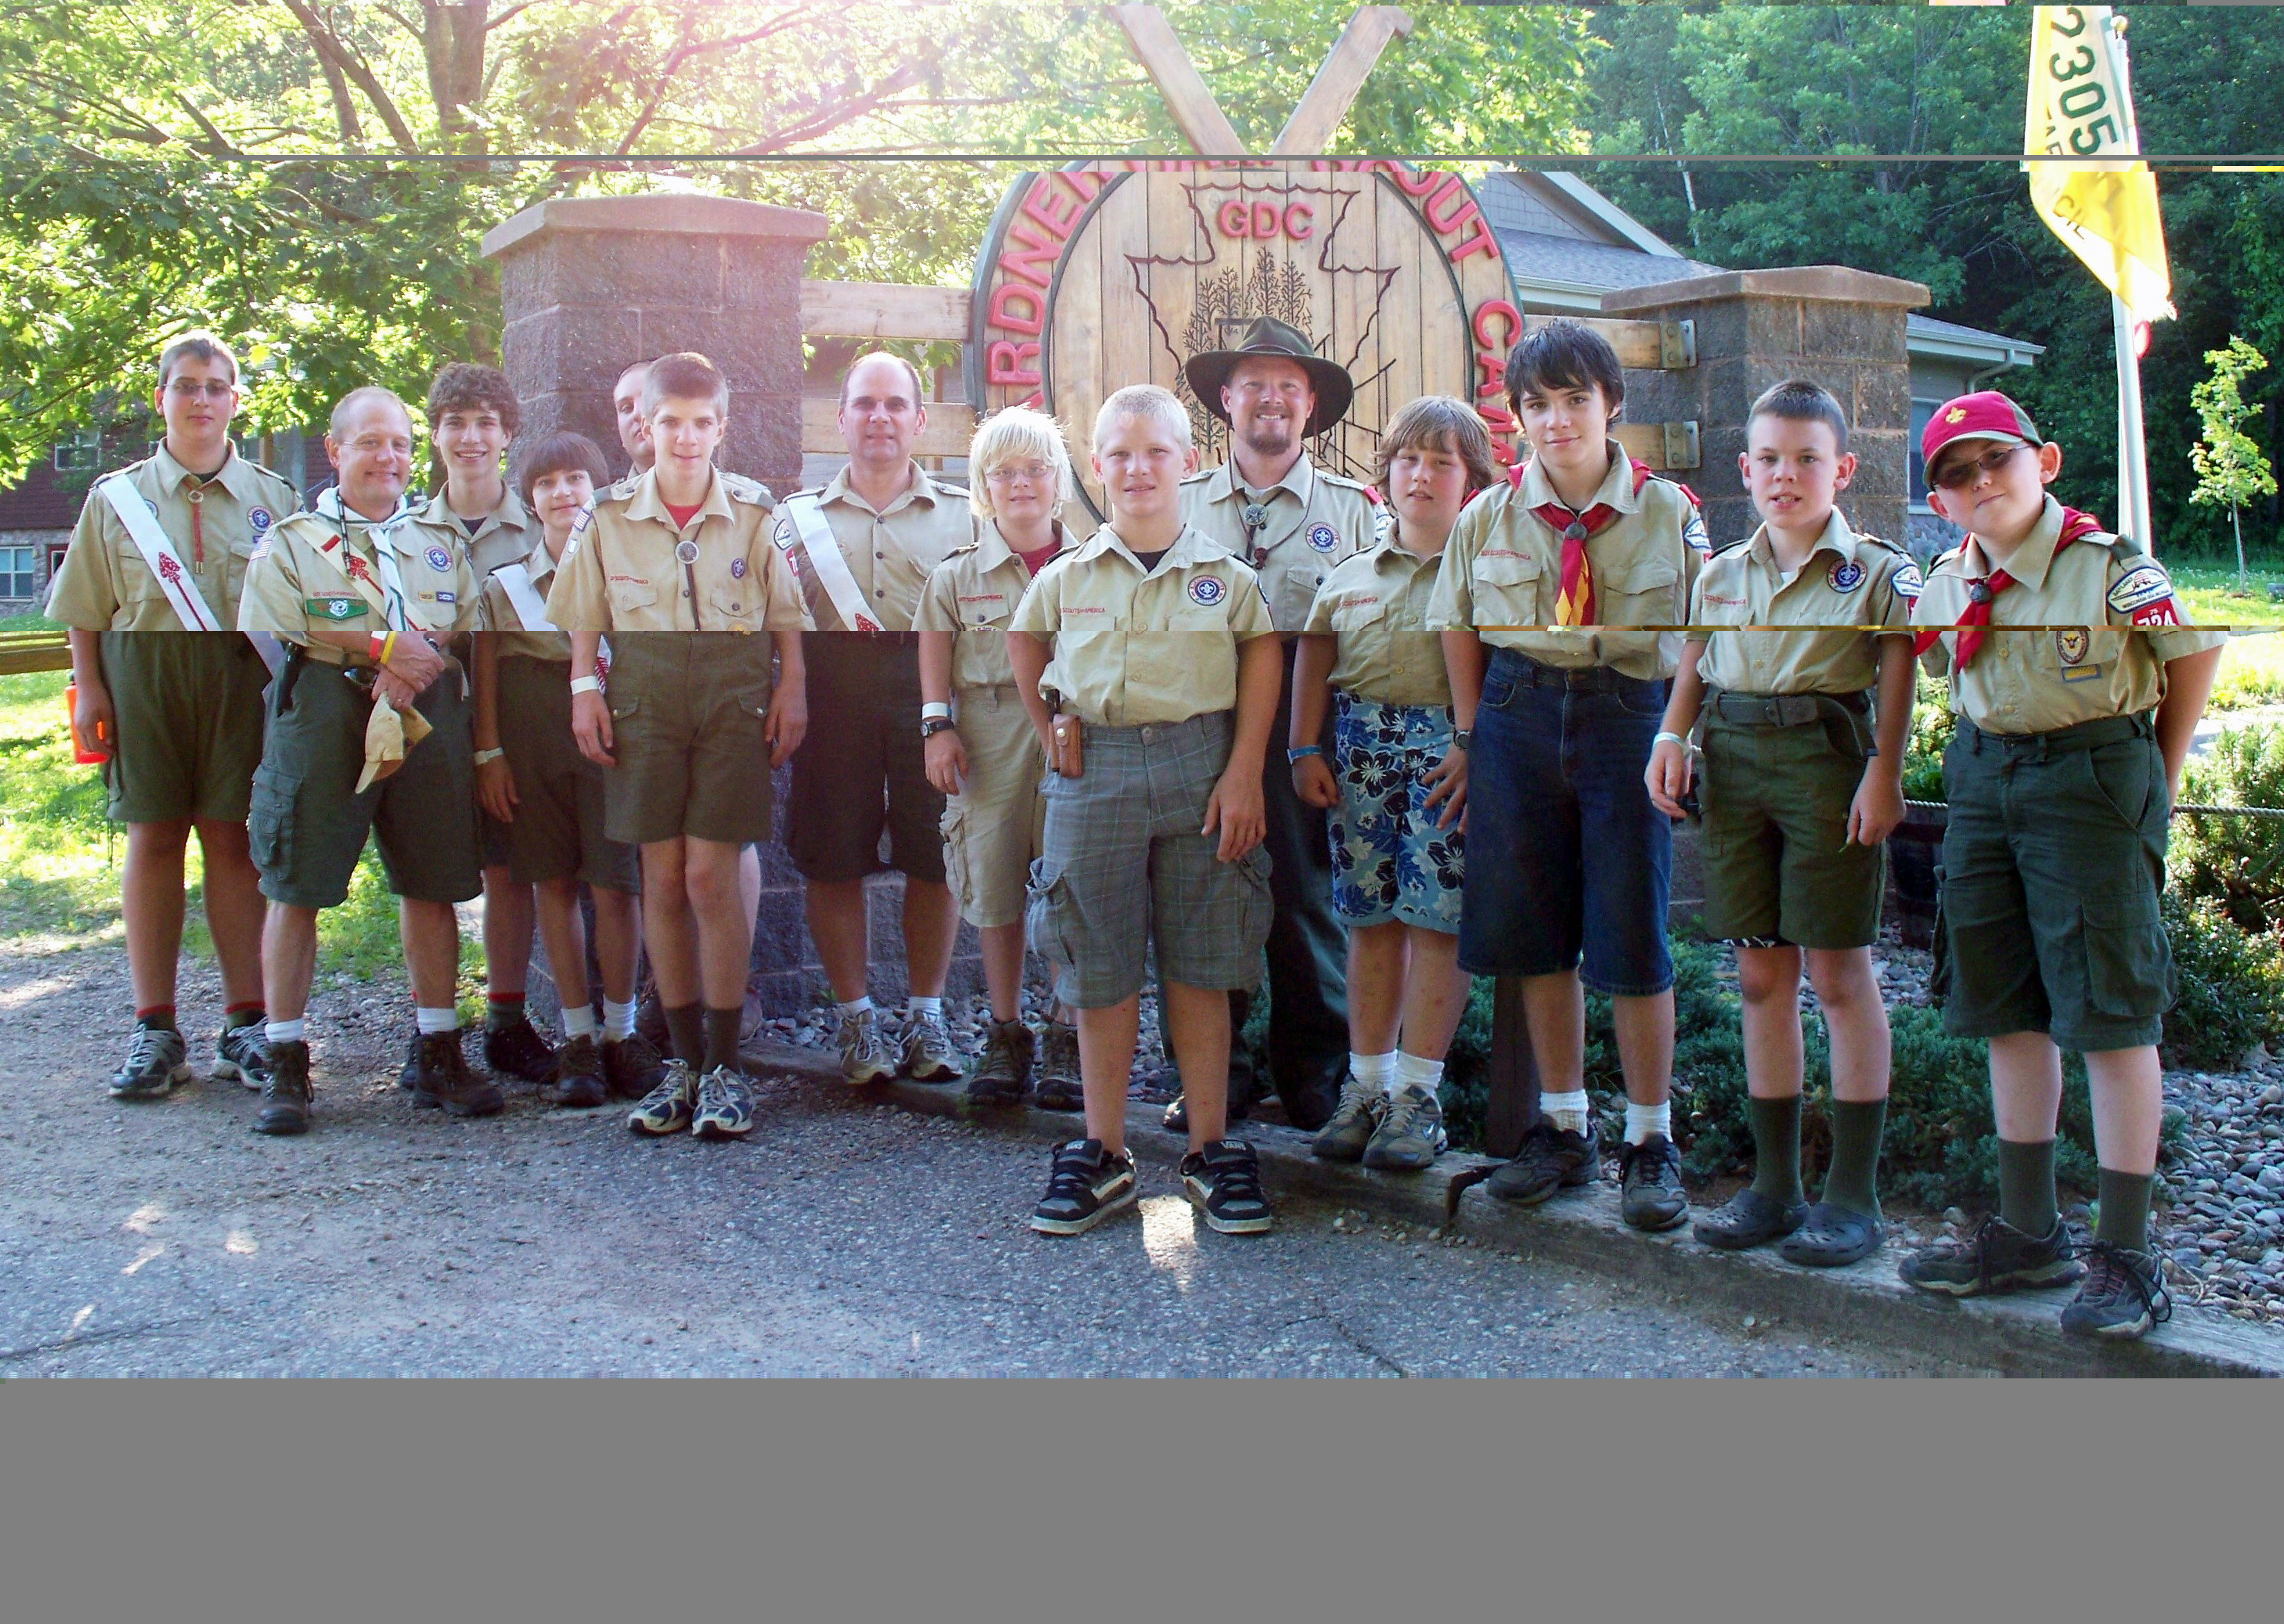 Destruction for Fun and Profit: The Tale of a Scout's Uniform